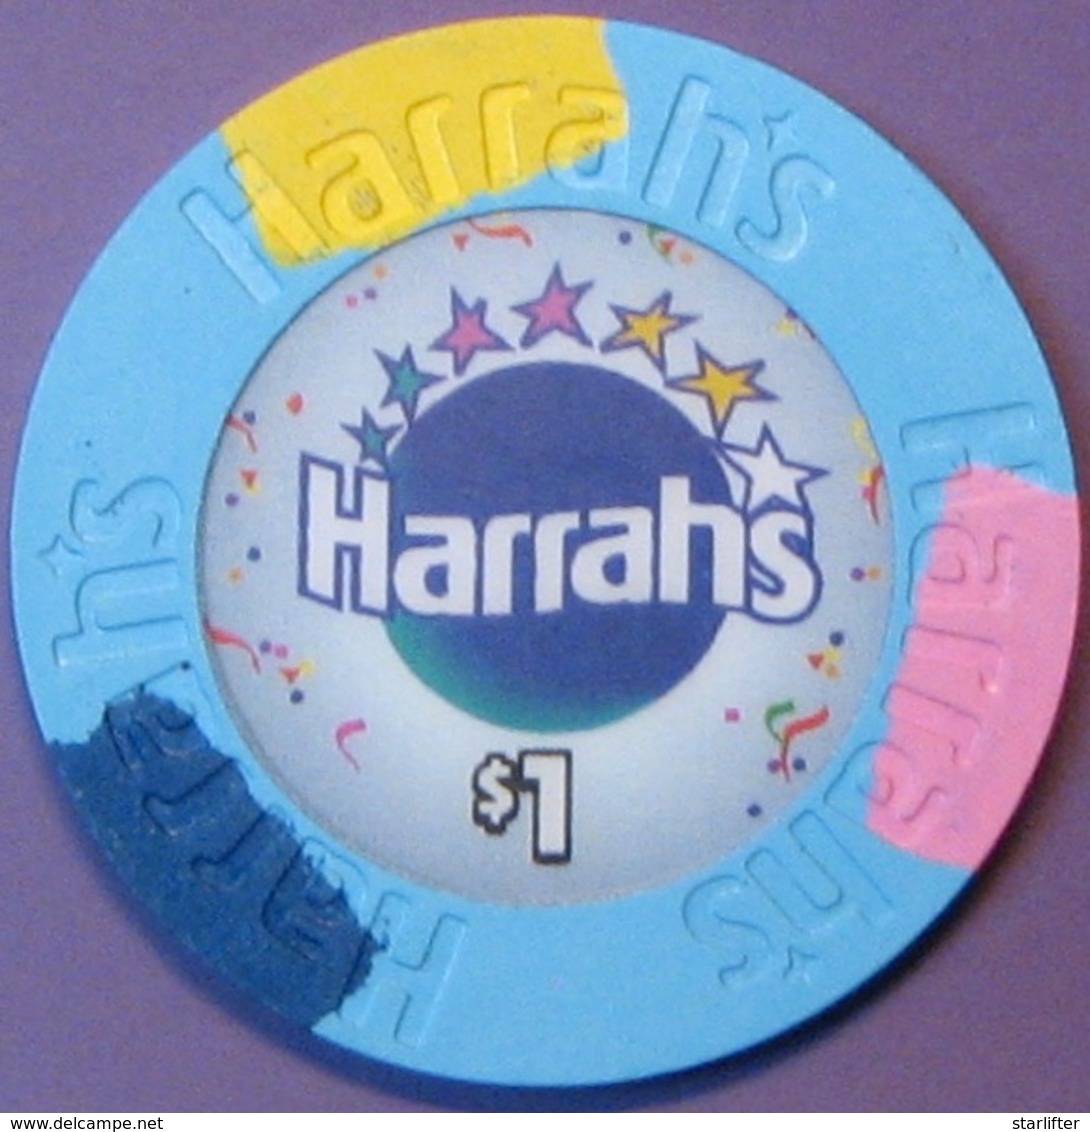 $1 Casino Chip. Harrahs, Las Vegas, NV. G96. - Casino